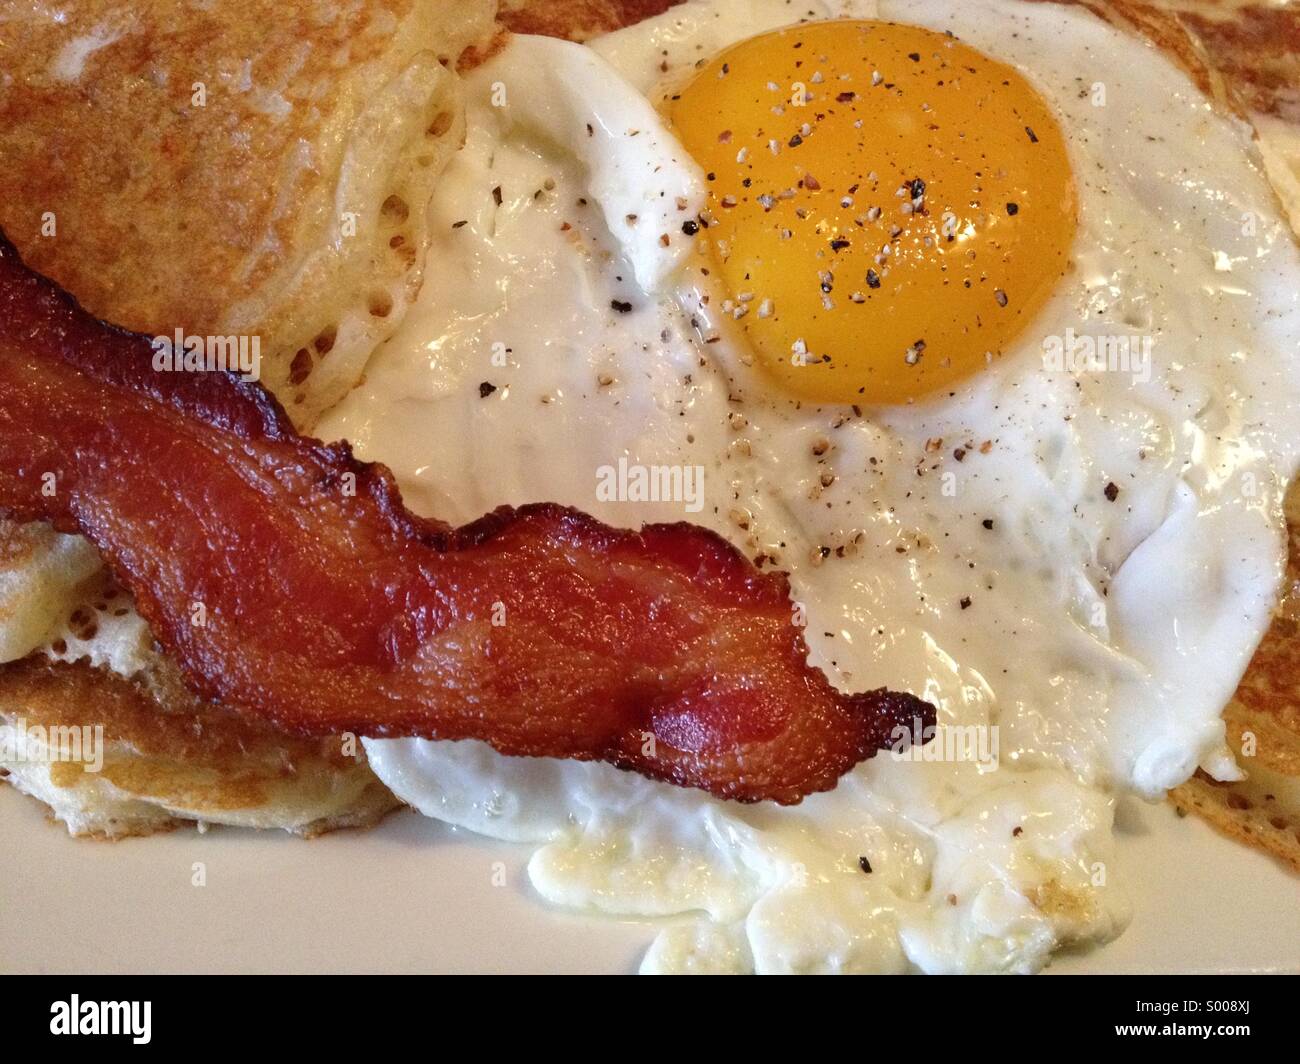 A tasty Breakfast Stock Photo